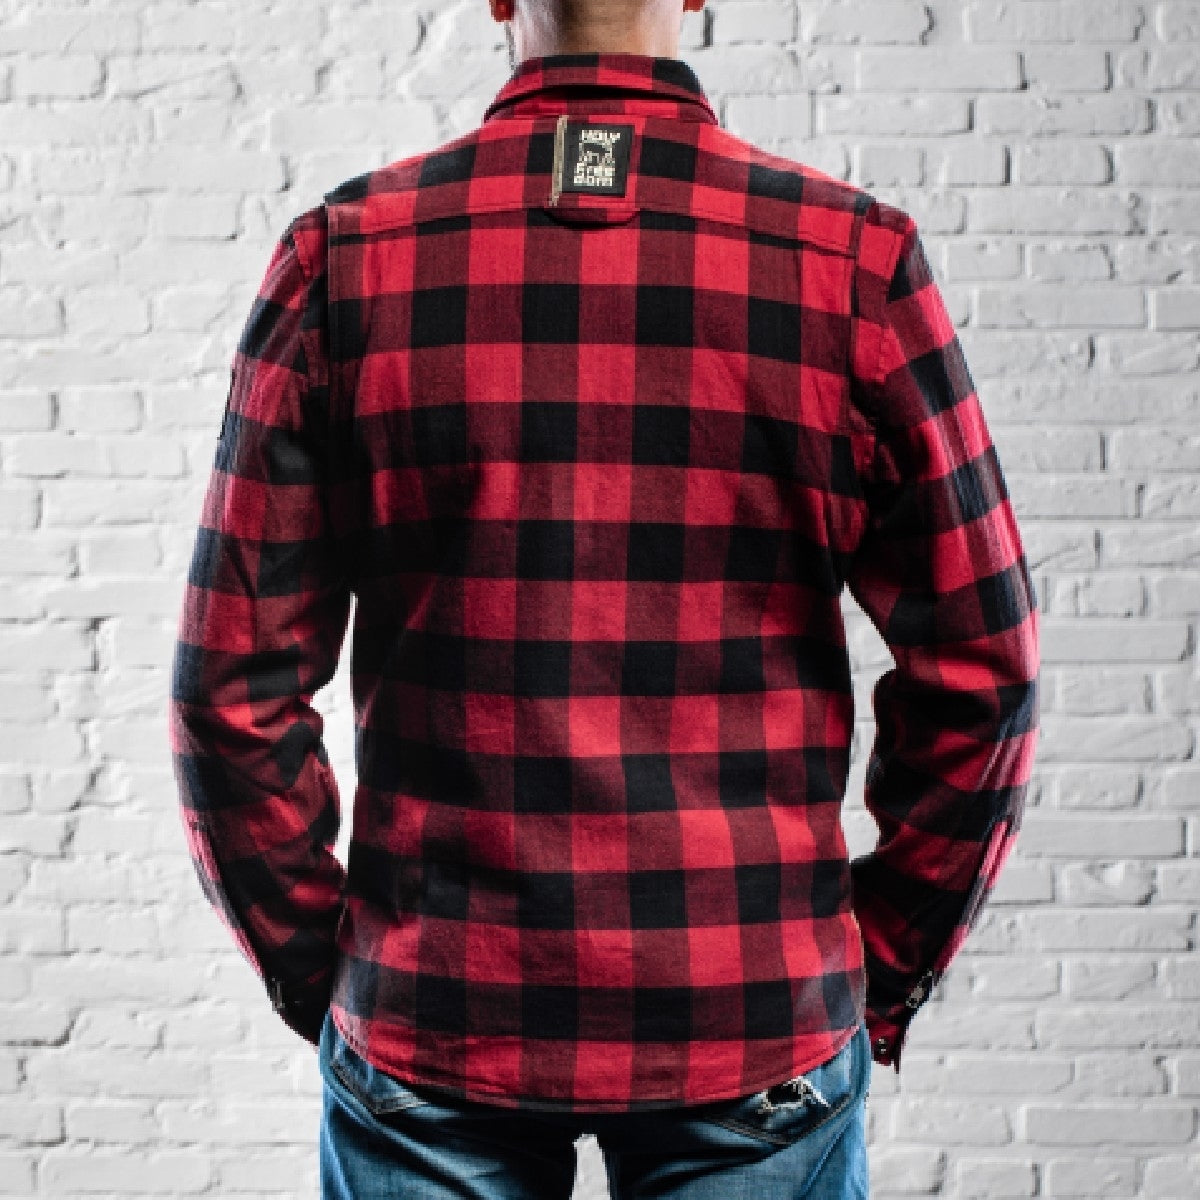 Holyfreedom Lumberjack Second Choice Jacket - Red